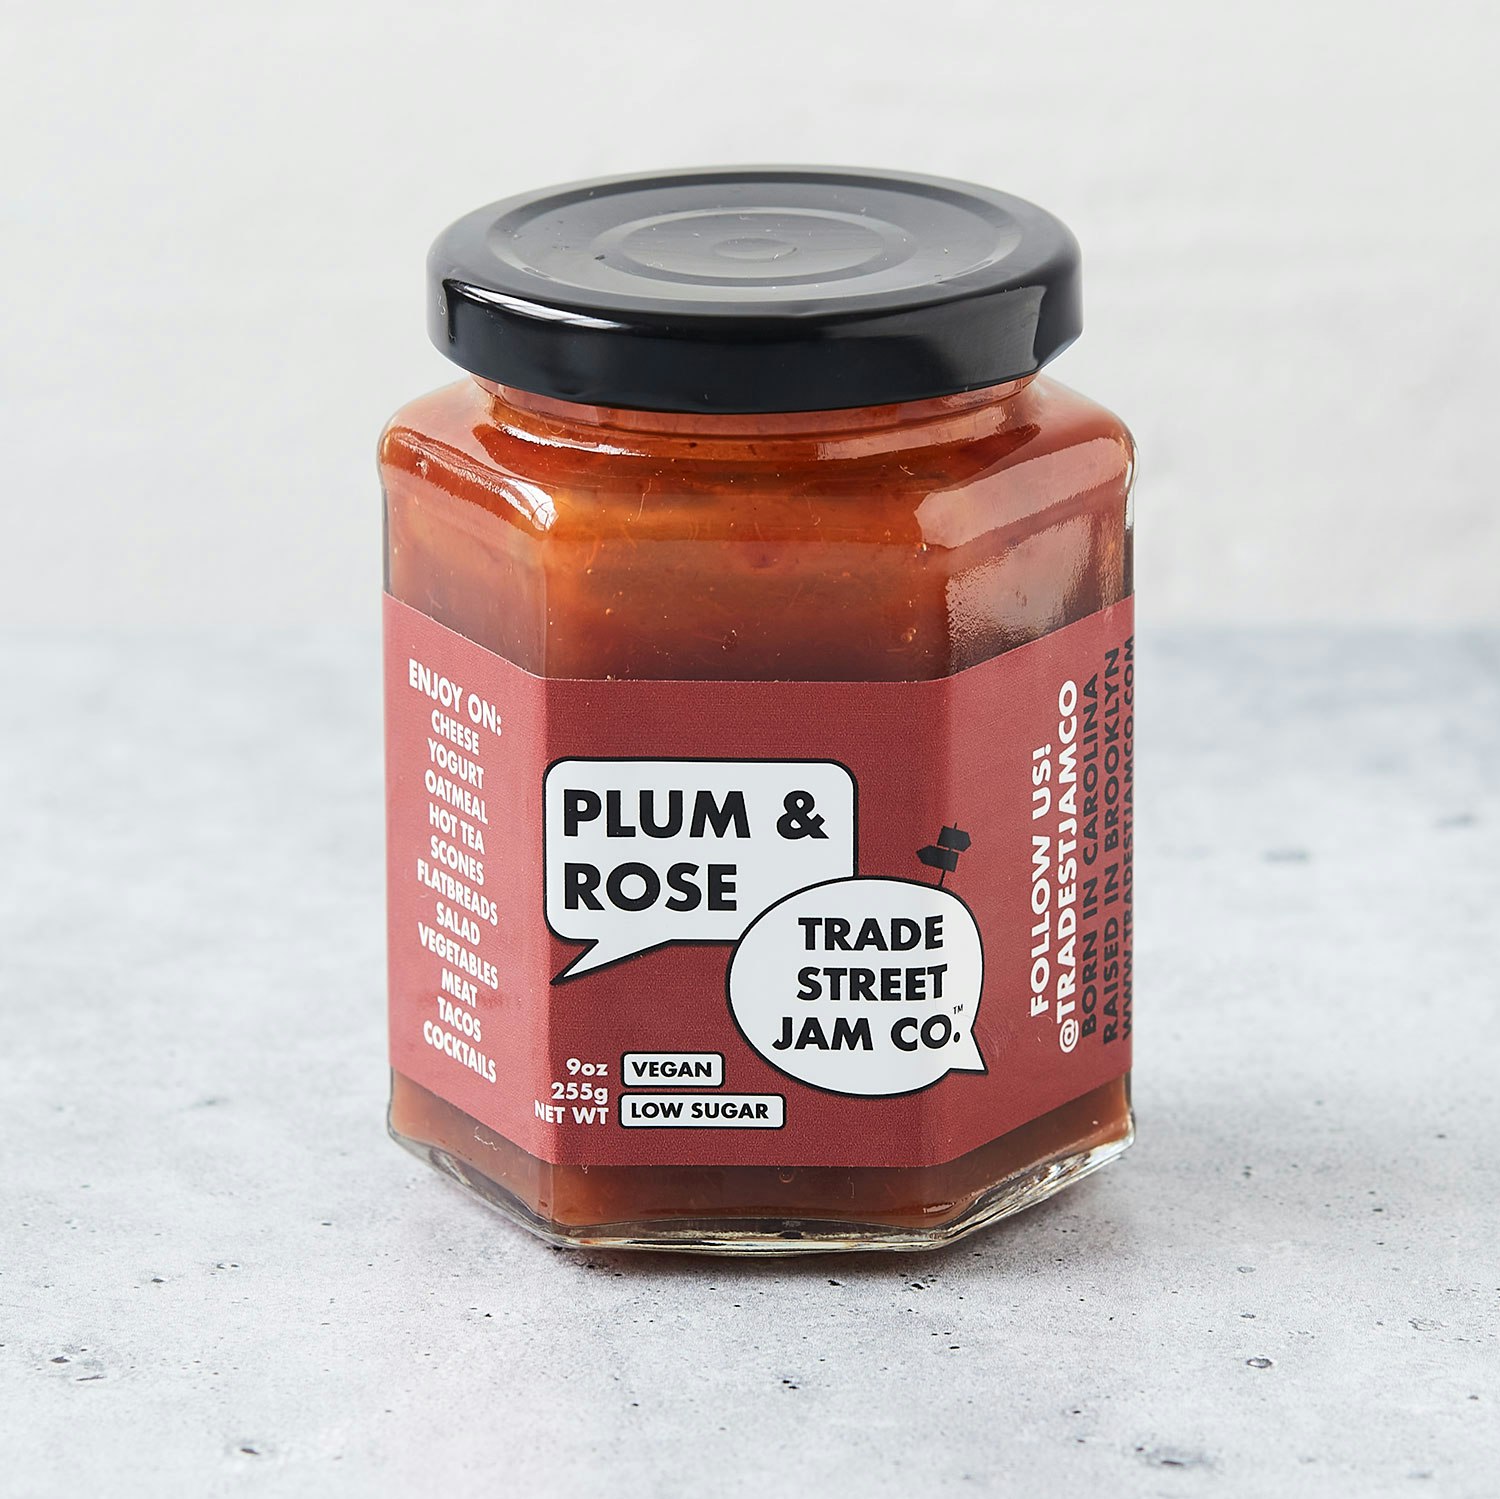 Trade Street Jam Co Plum Rose Jam specialty foods